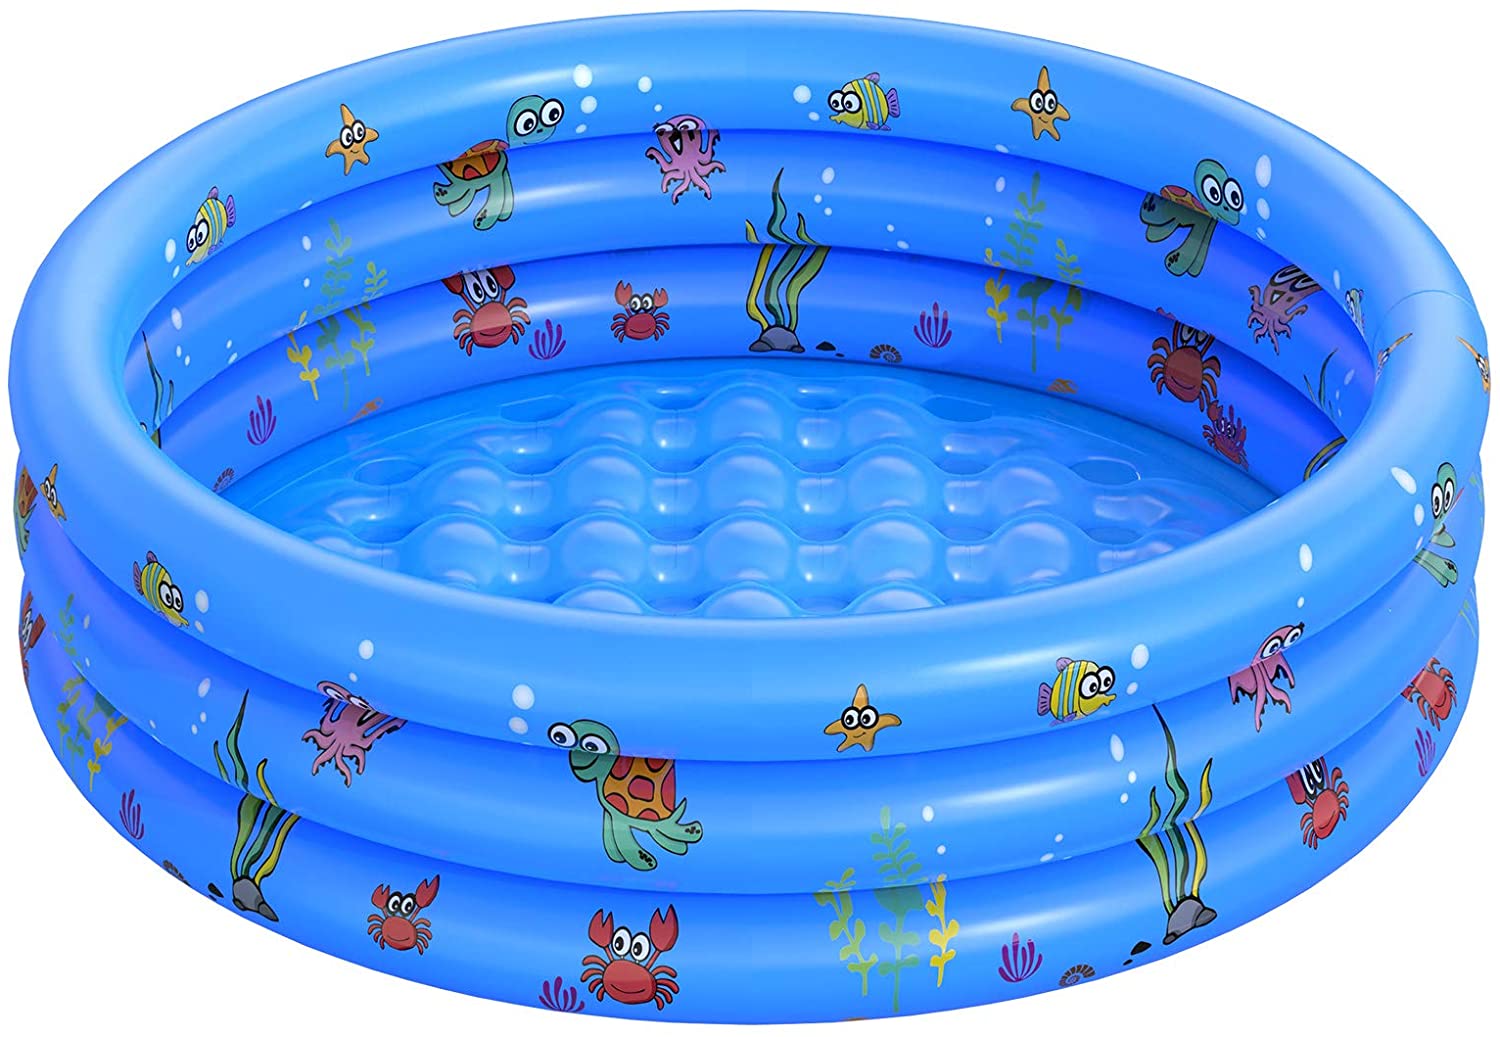 VIVI MAO Non-Toxic Easy Store Inflatable Baby Pool